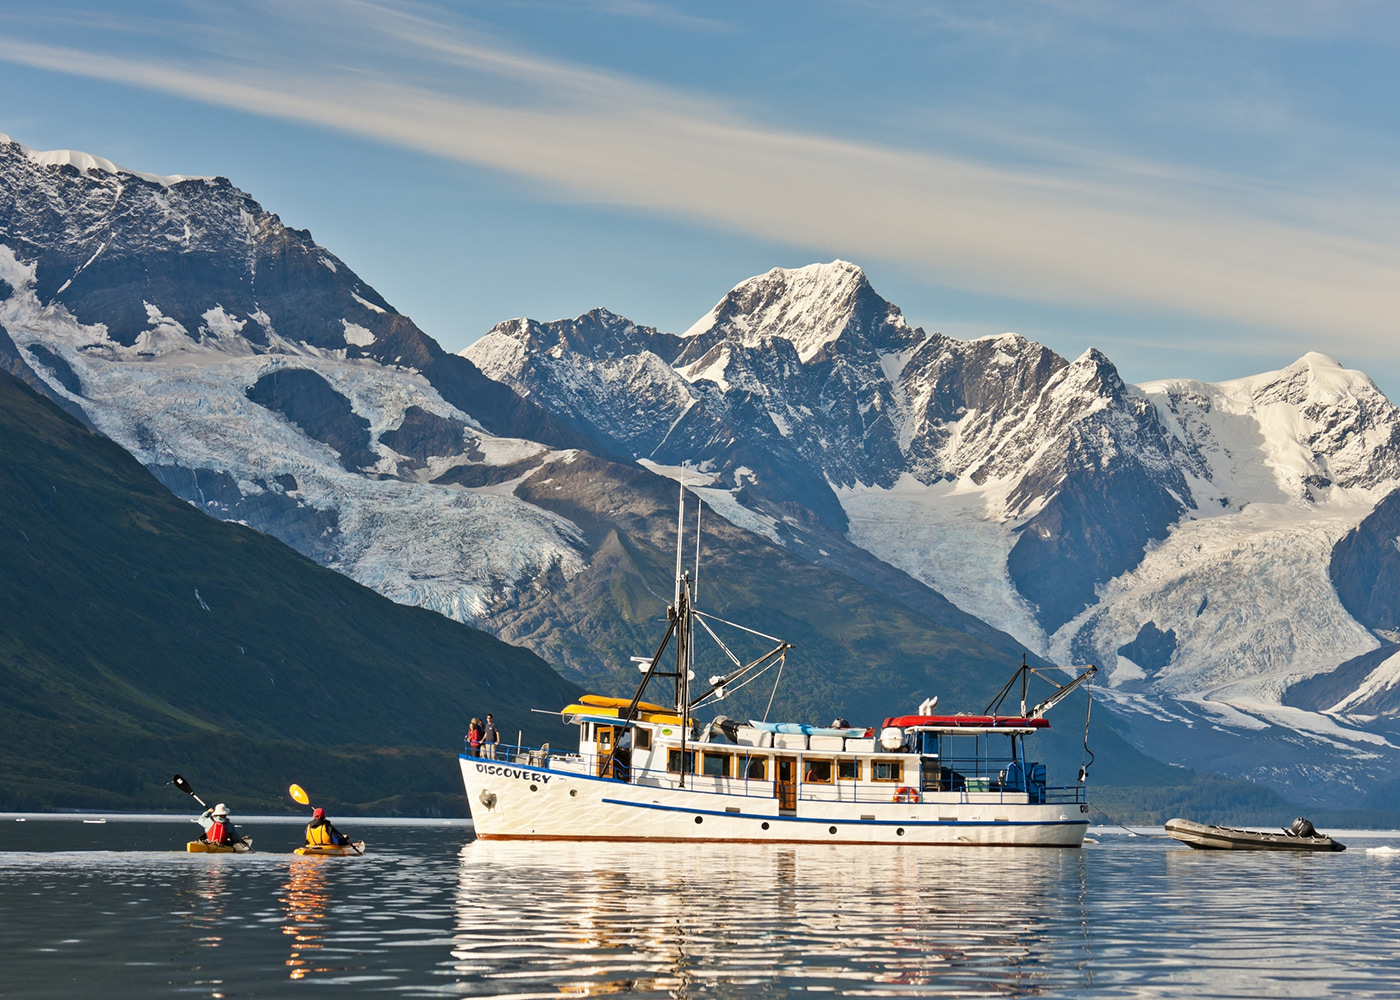 The Best of Alaska